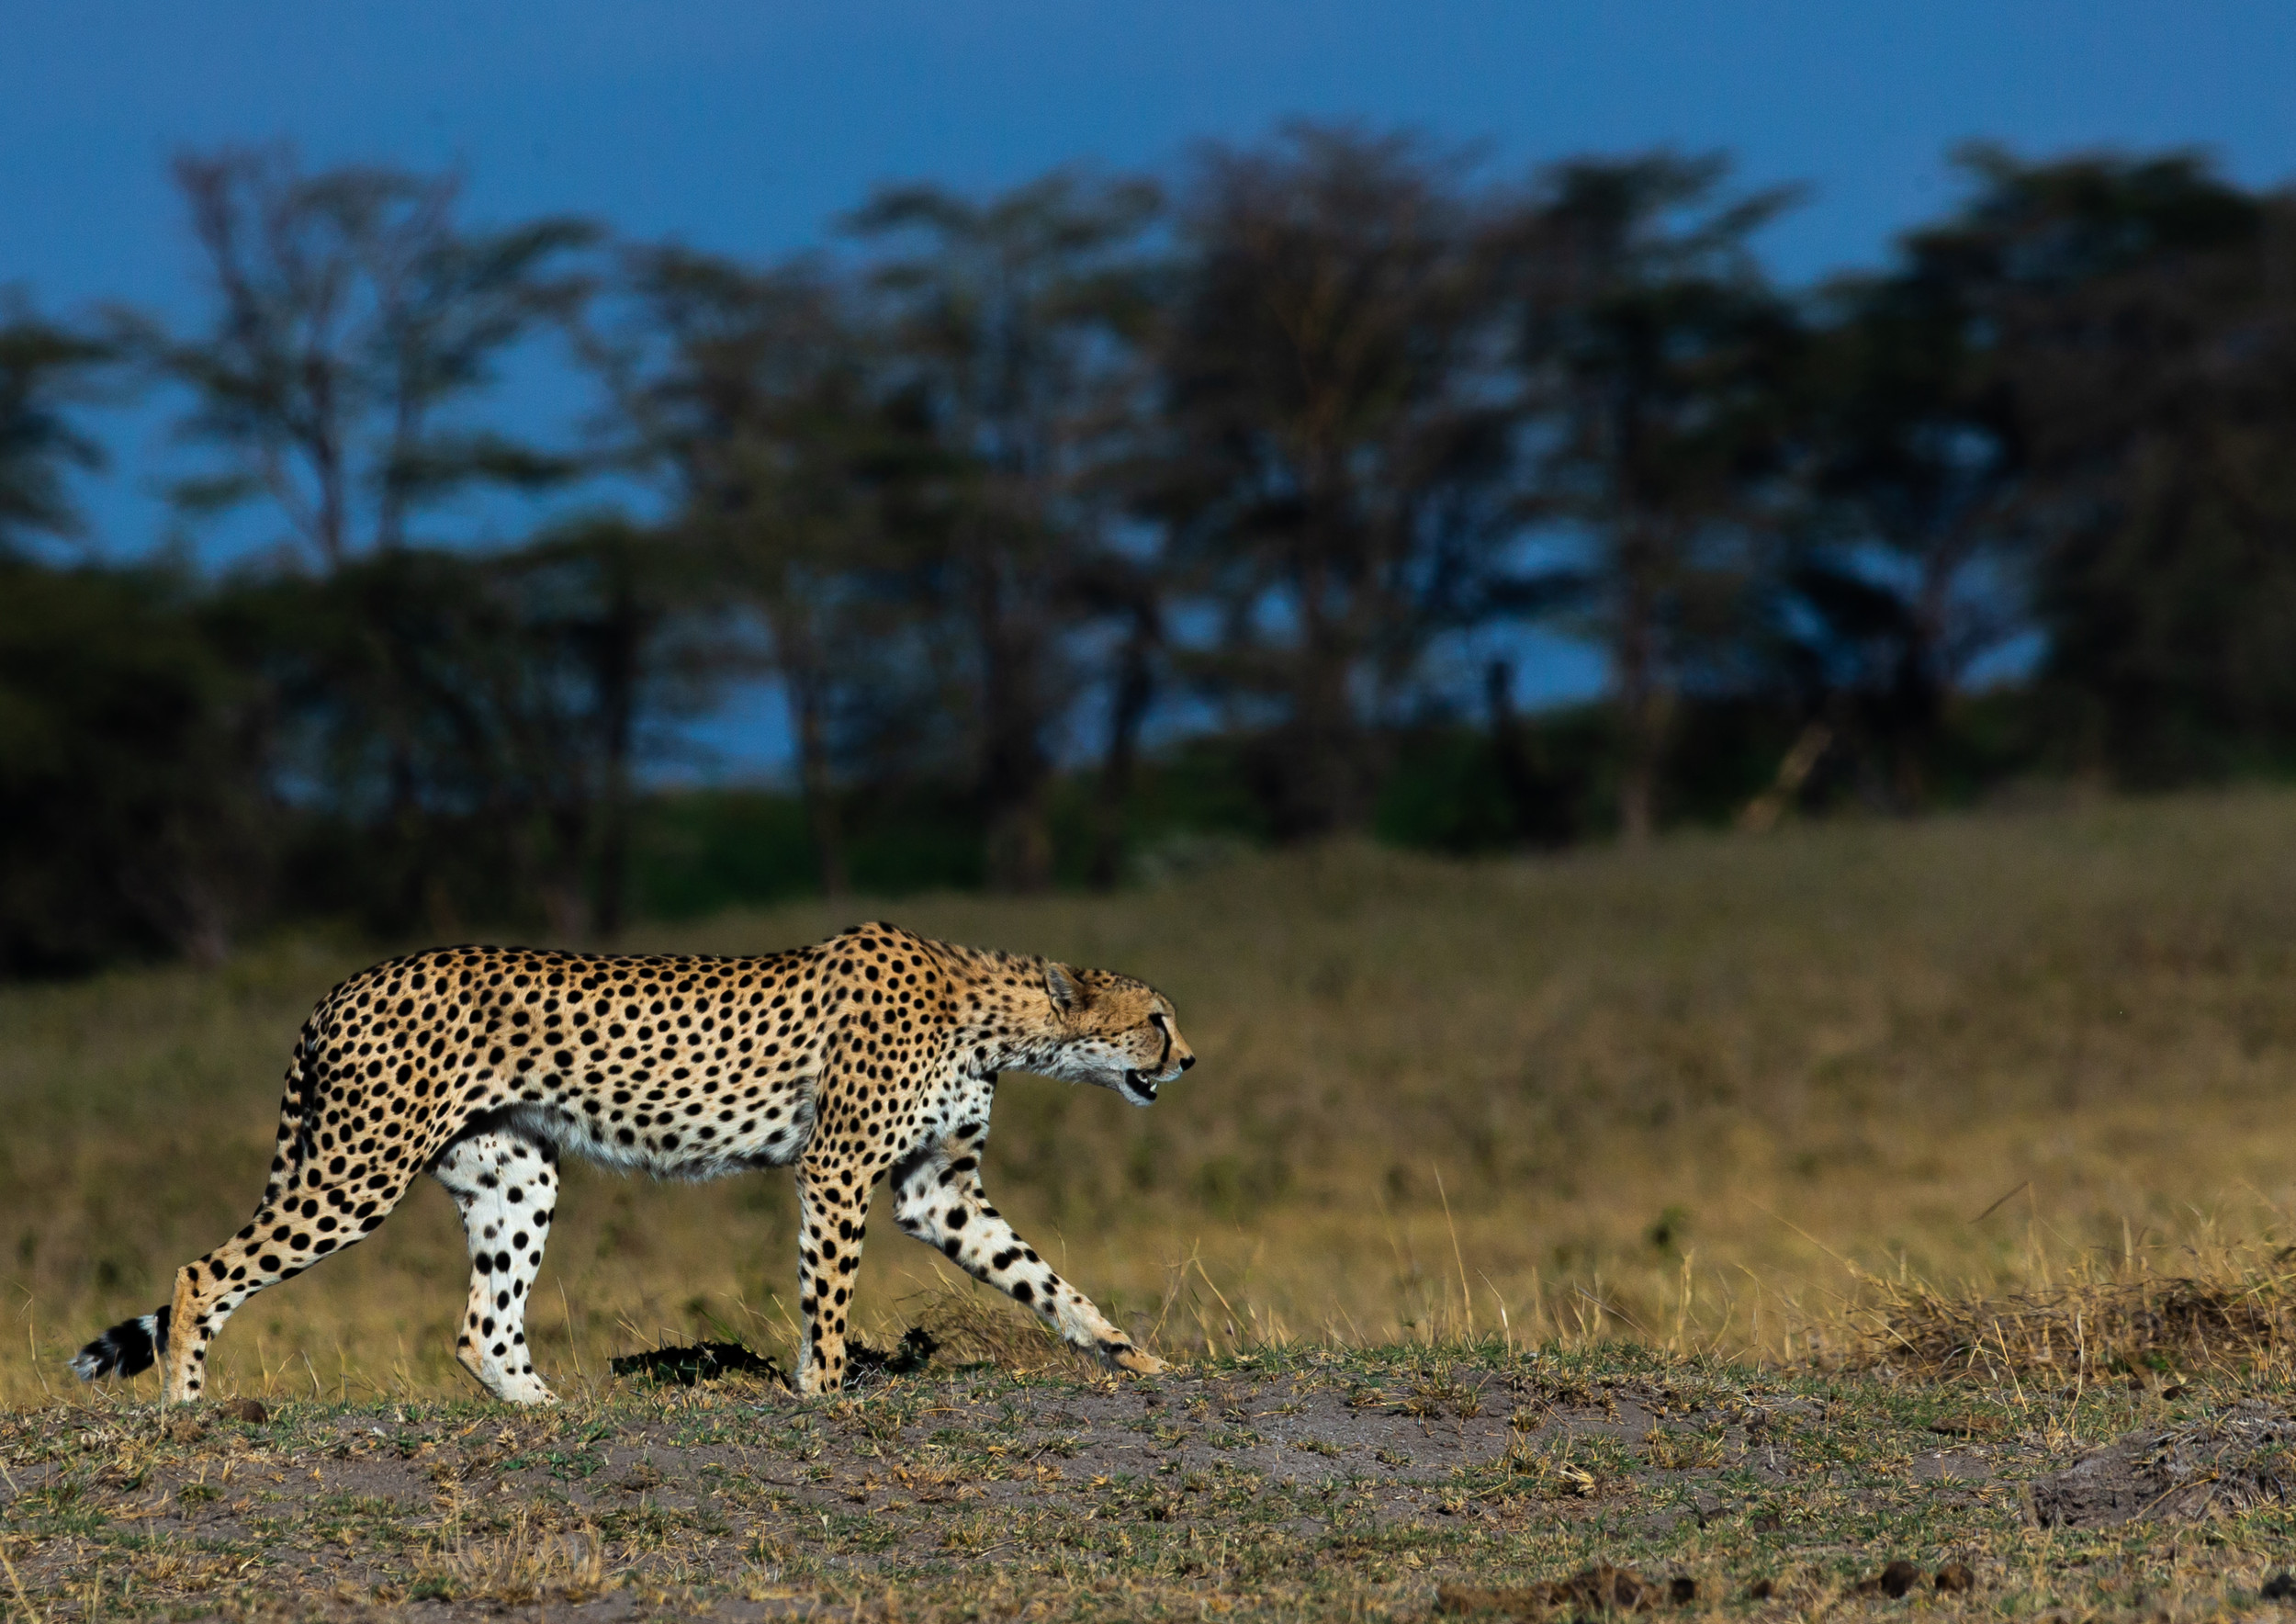 Cats Gonna Cat': Viral Video Shows Moment Cheetah Hops Into Safari Vehicle